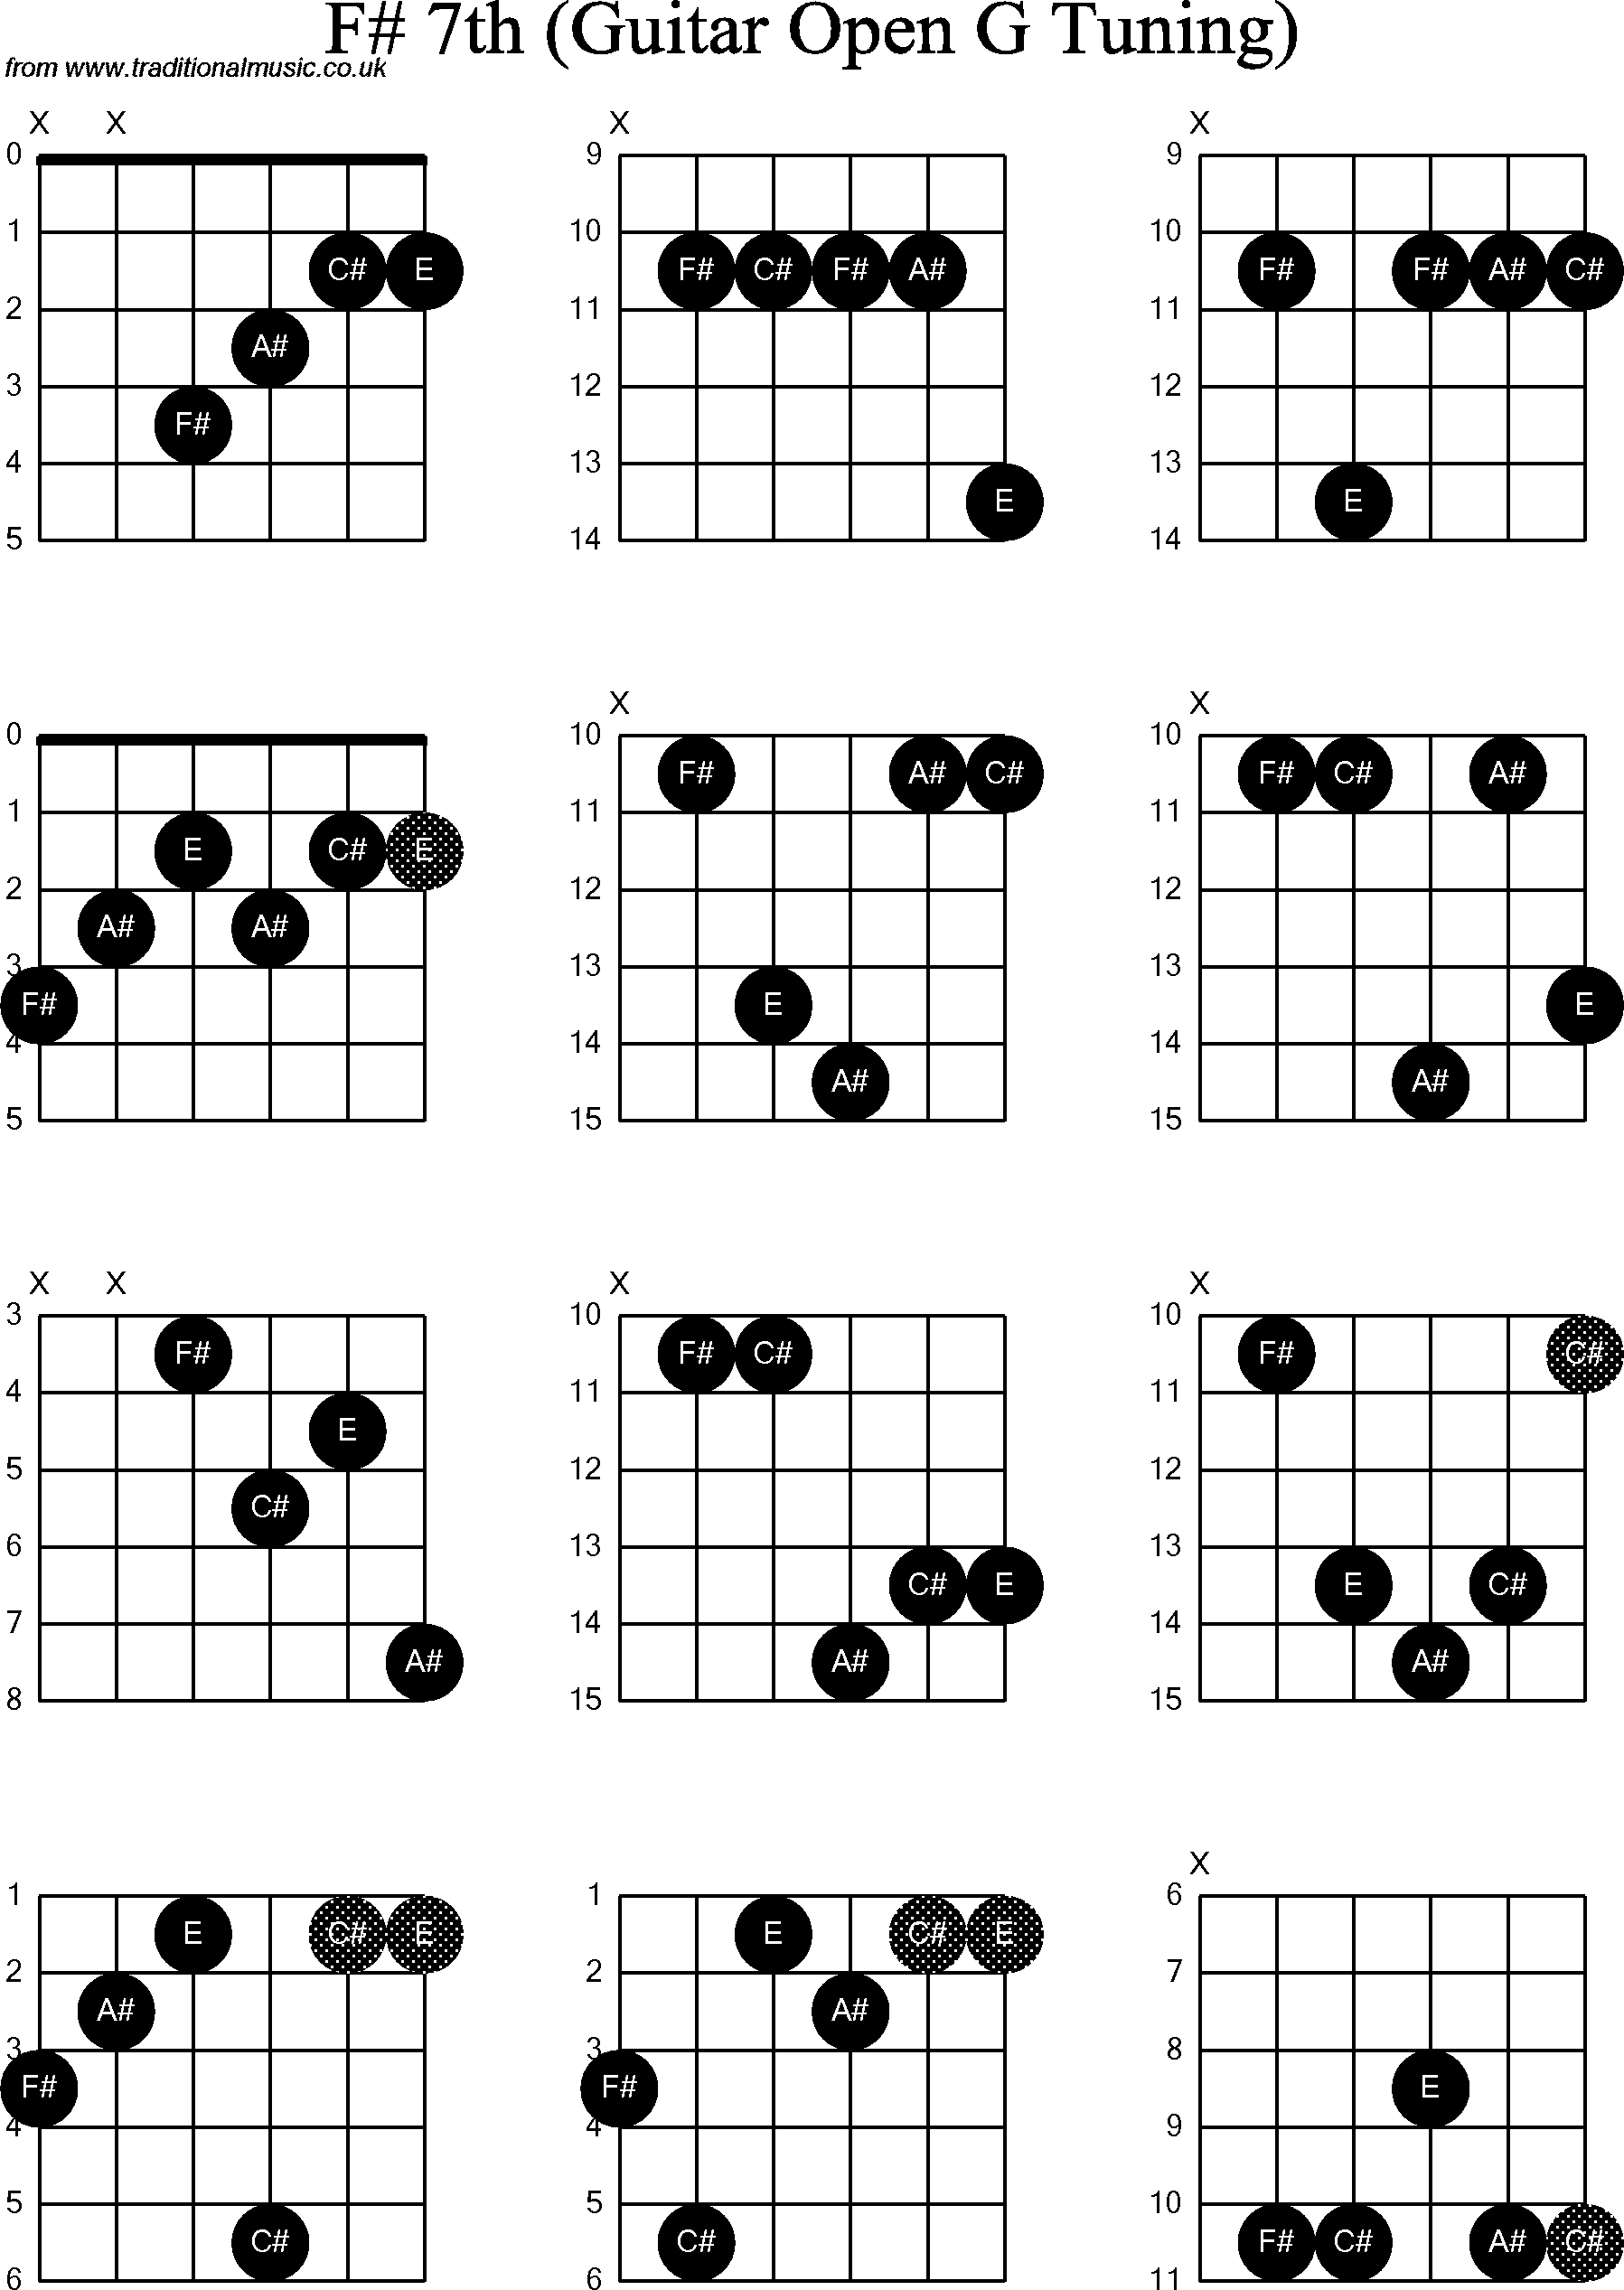 Chord diagrams for Dobro F#7th